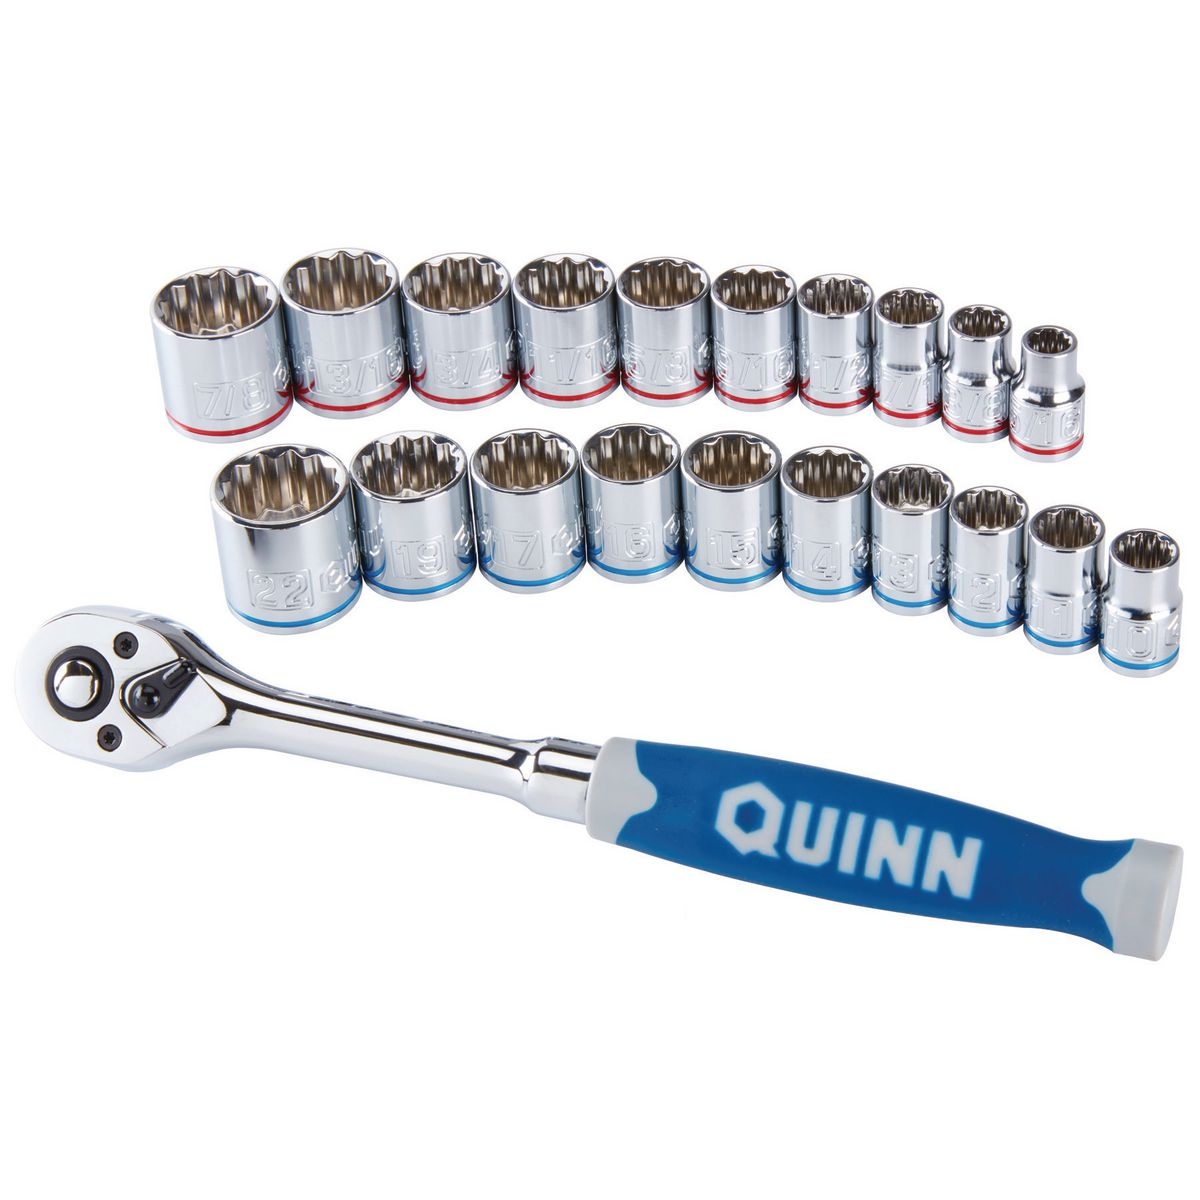 QUINN 3/8 in. Drive SAE & Metric Chrome Socket and Ratchet Set 21 Pc. - Item 64536 / 64515